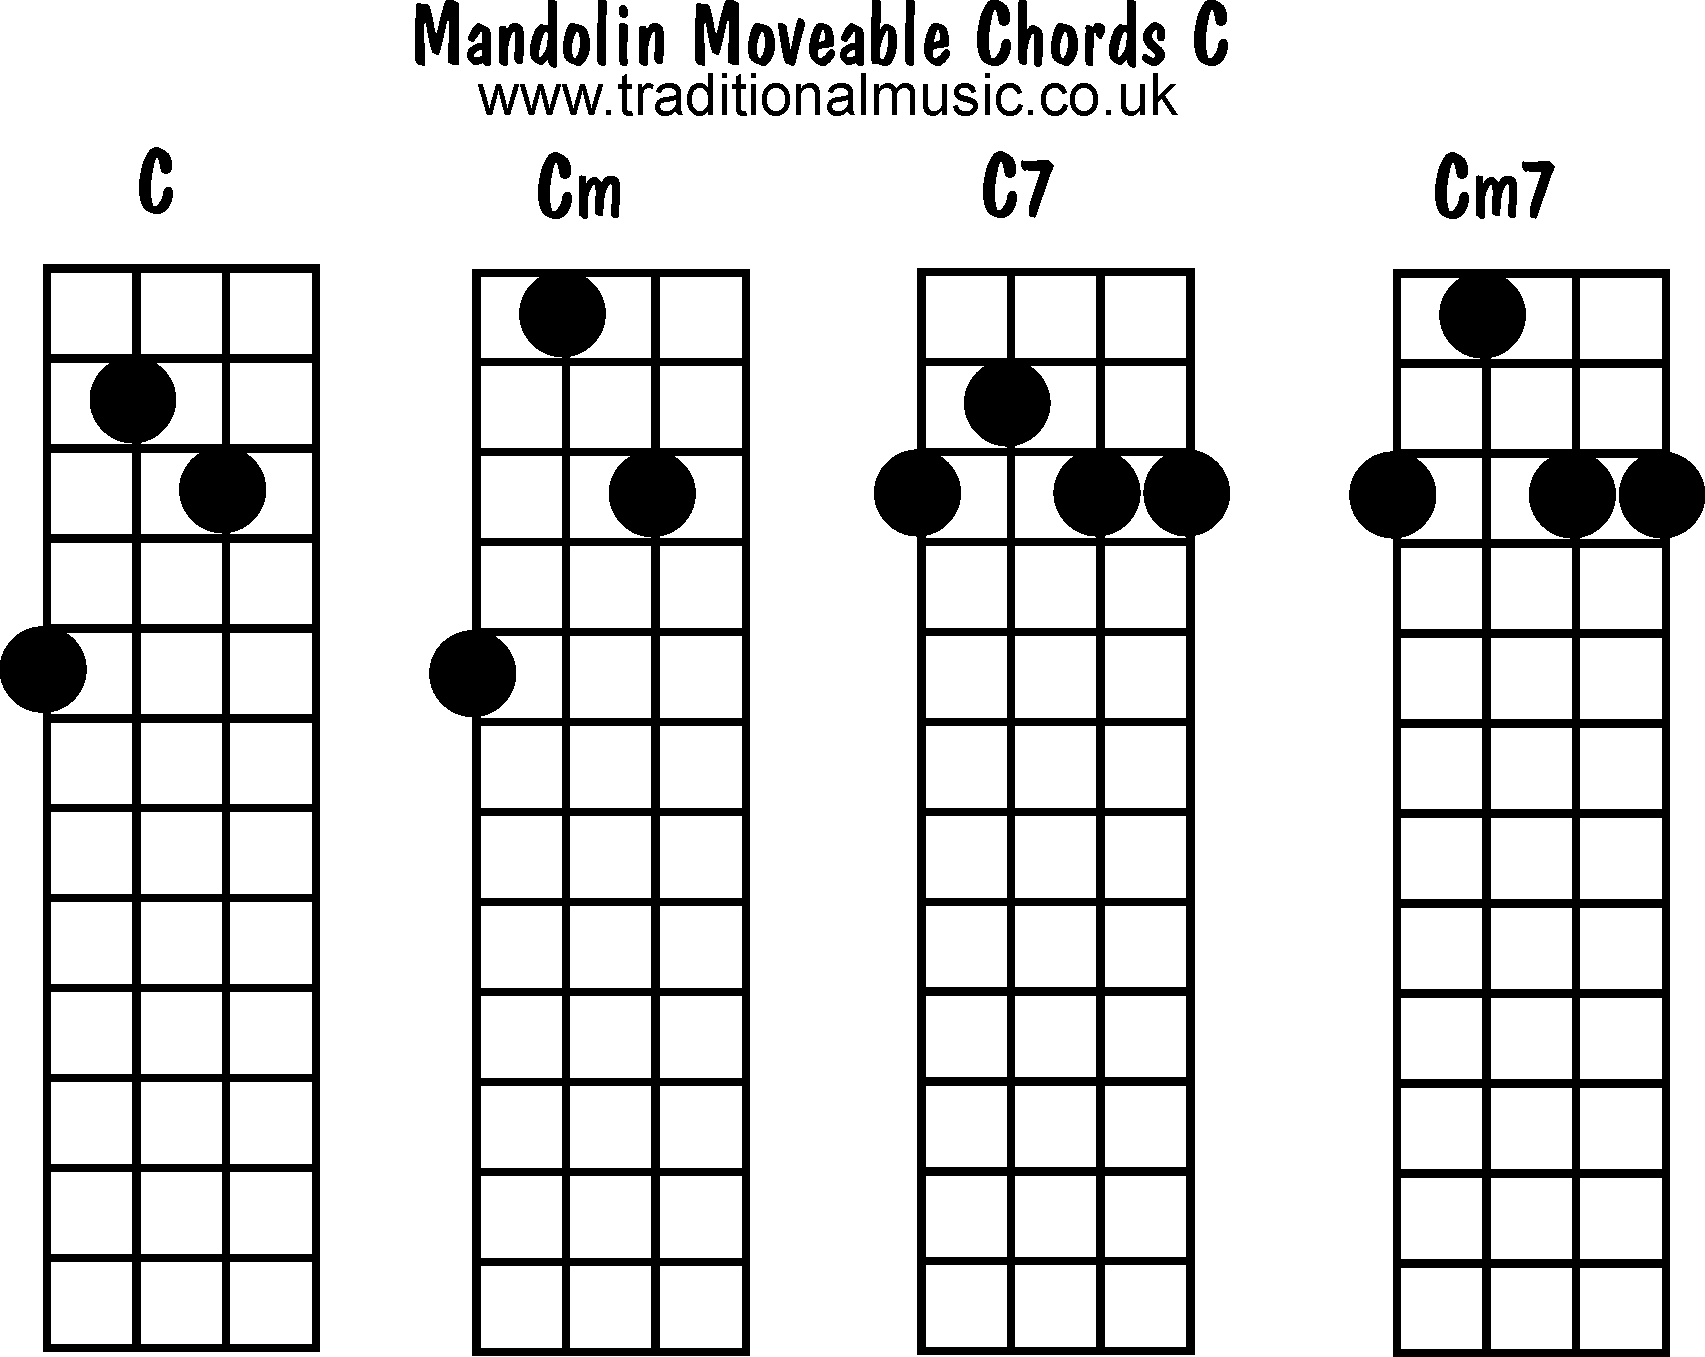 Moveable mandolin chords: C, Cm, C7, Cm7